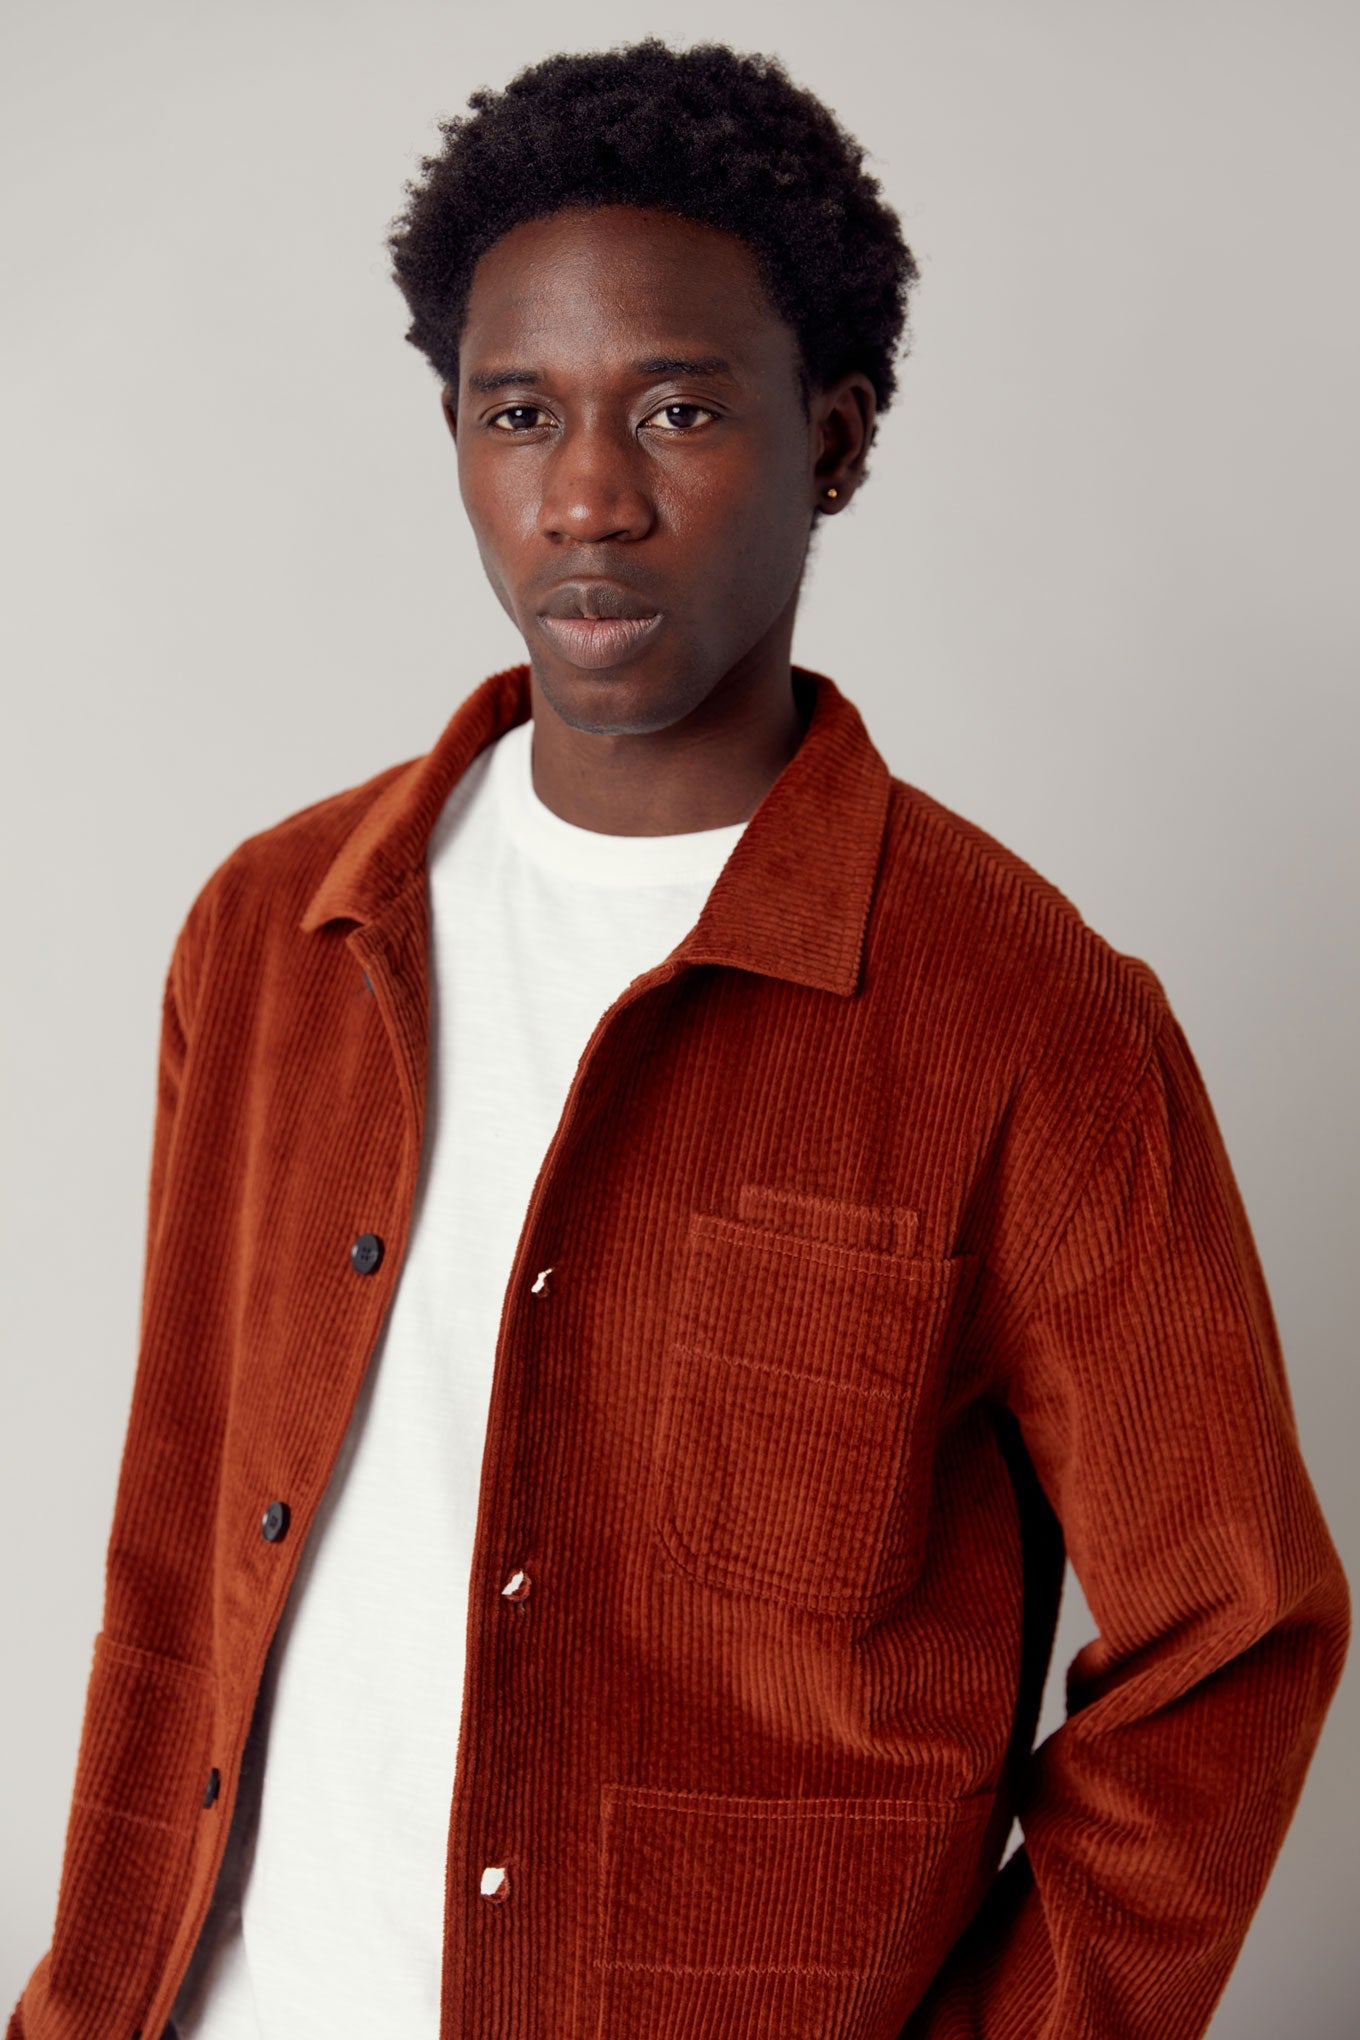 Red-brown corduroy jacket MONDRIAN made of 100% organic cotton from Komodo